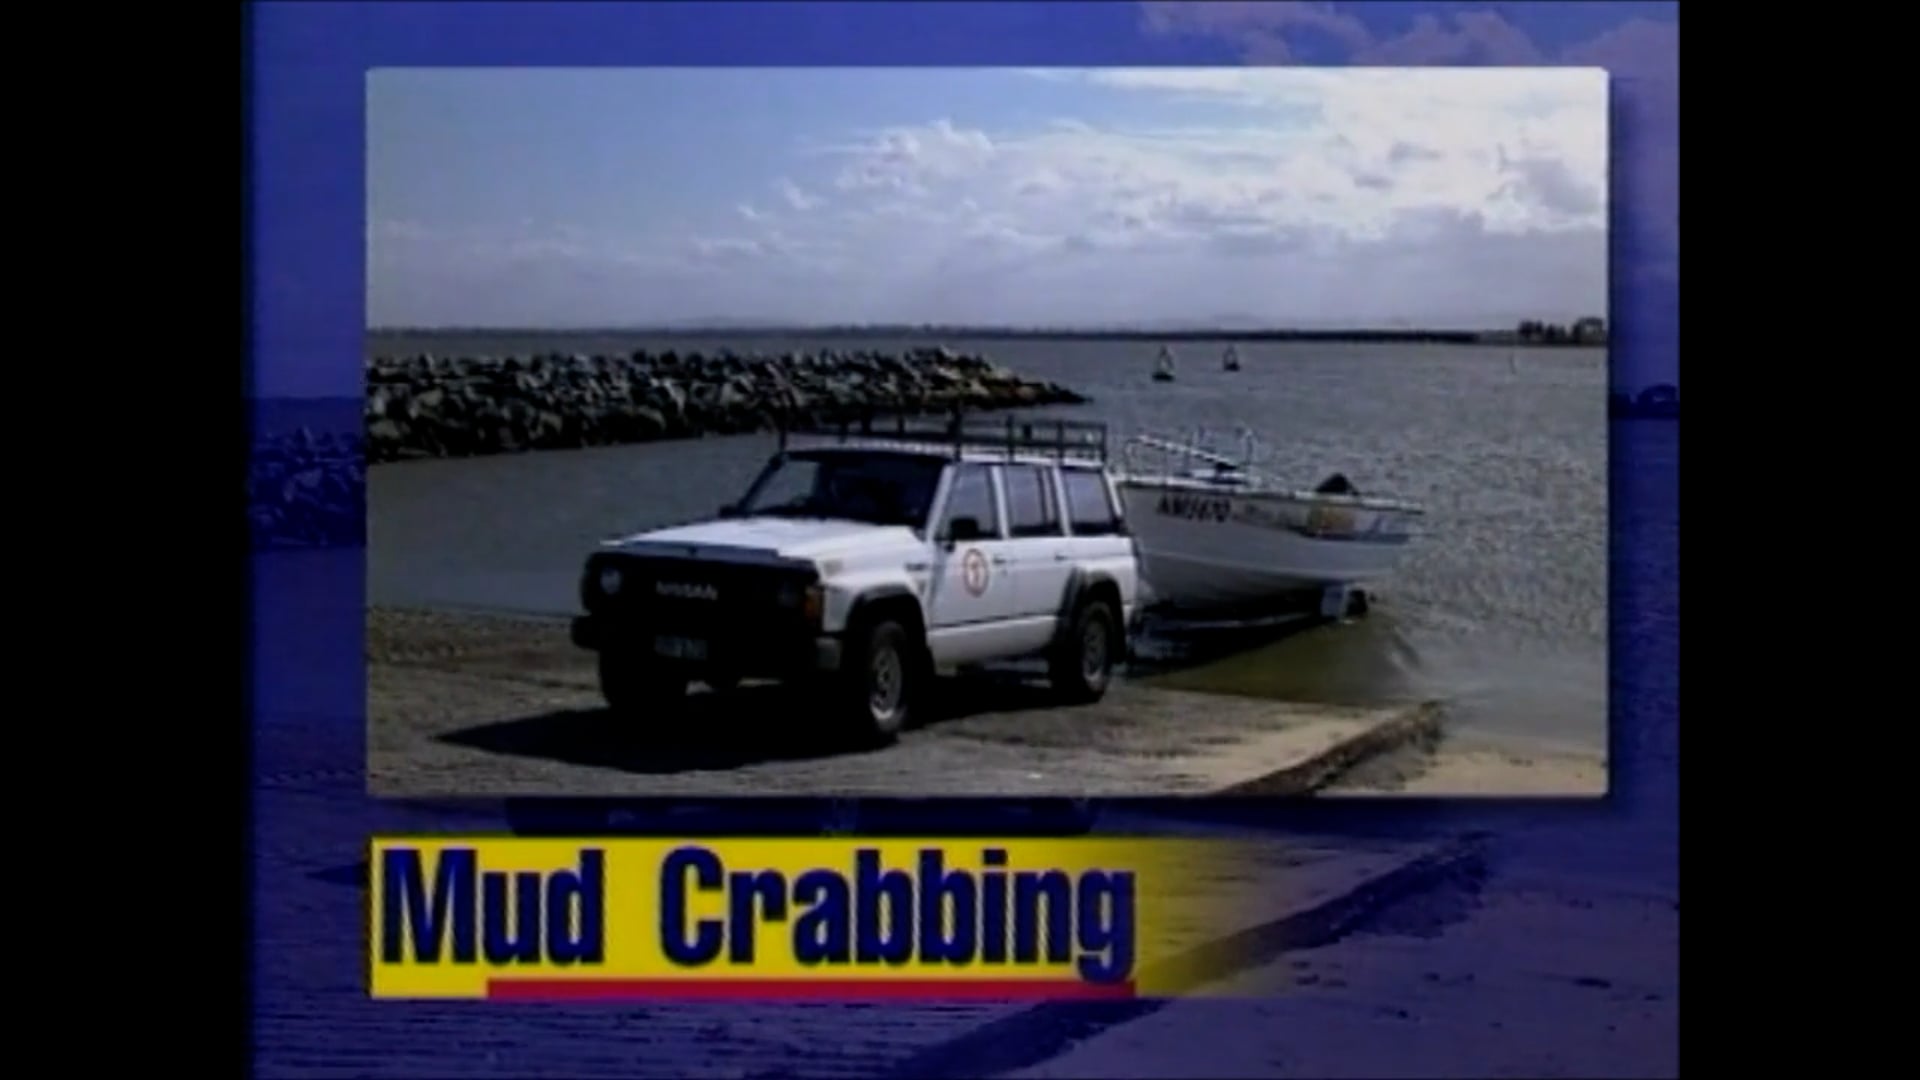 Mud Crabbing Hays Inlet – Martin Cowling